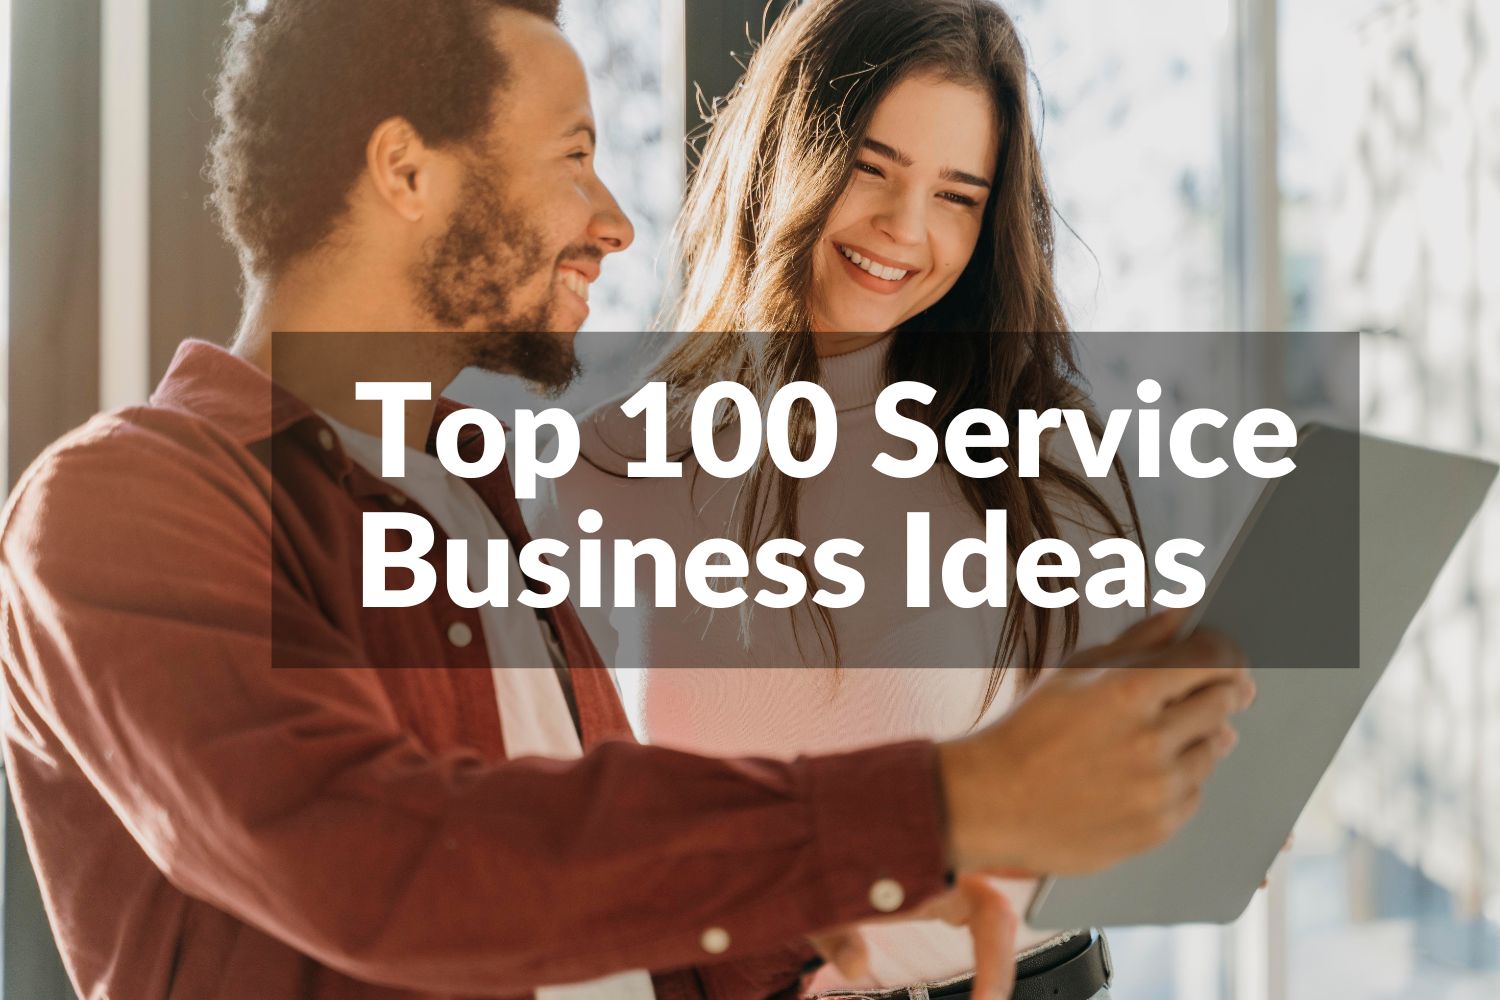 Top Service Business Ideas